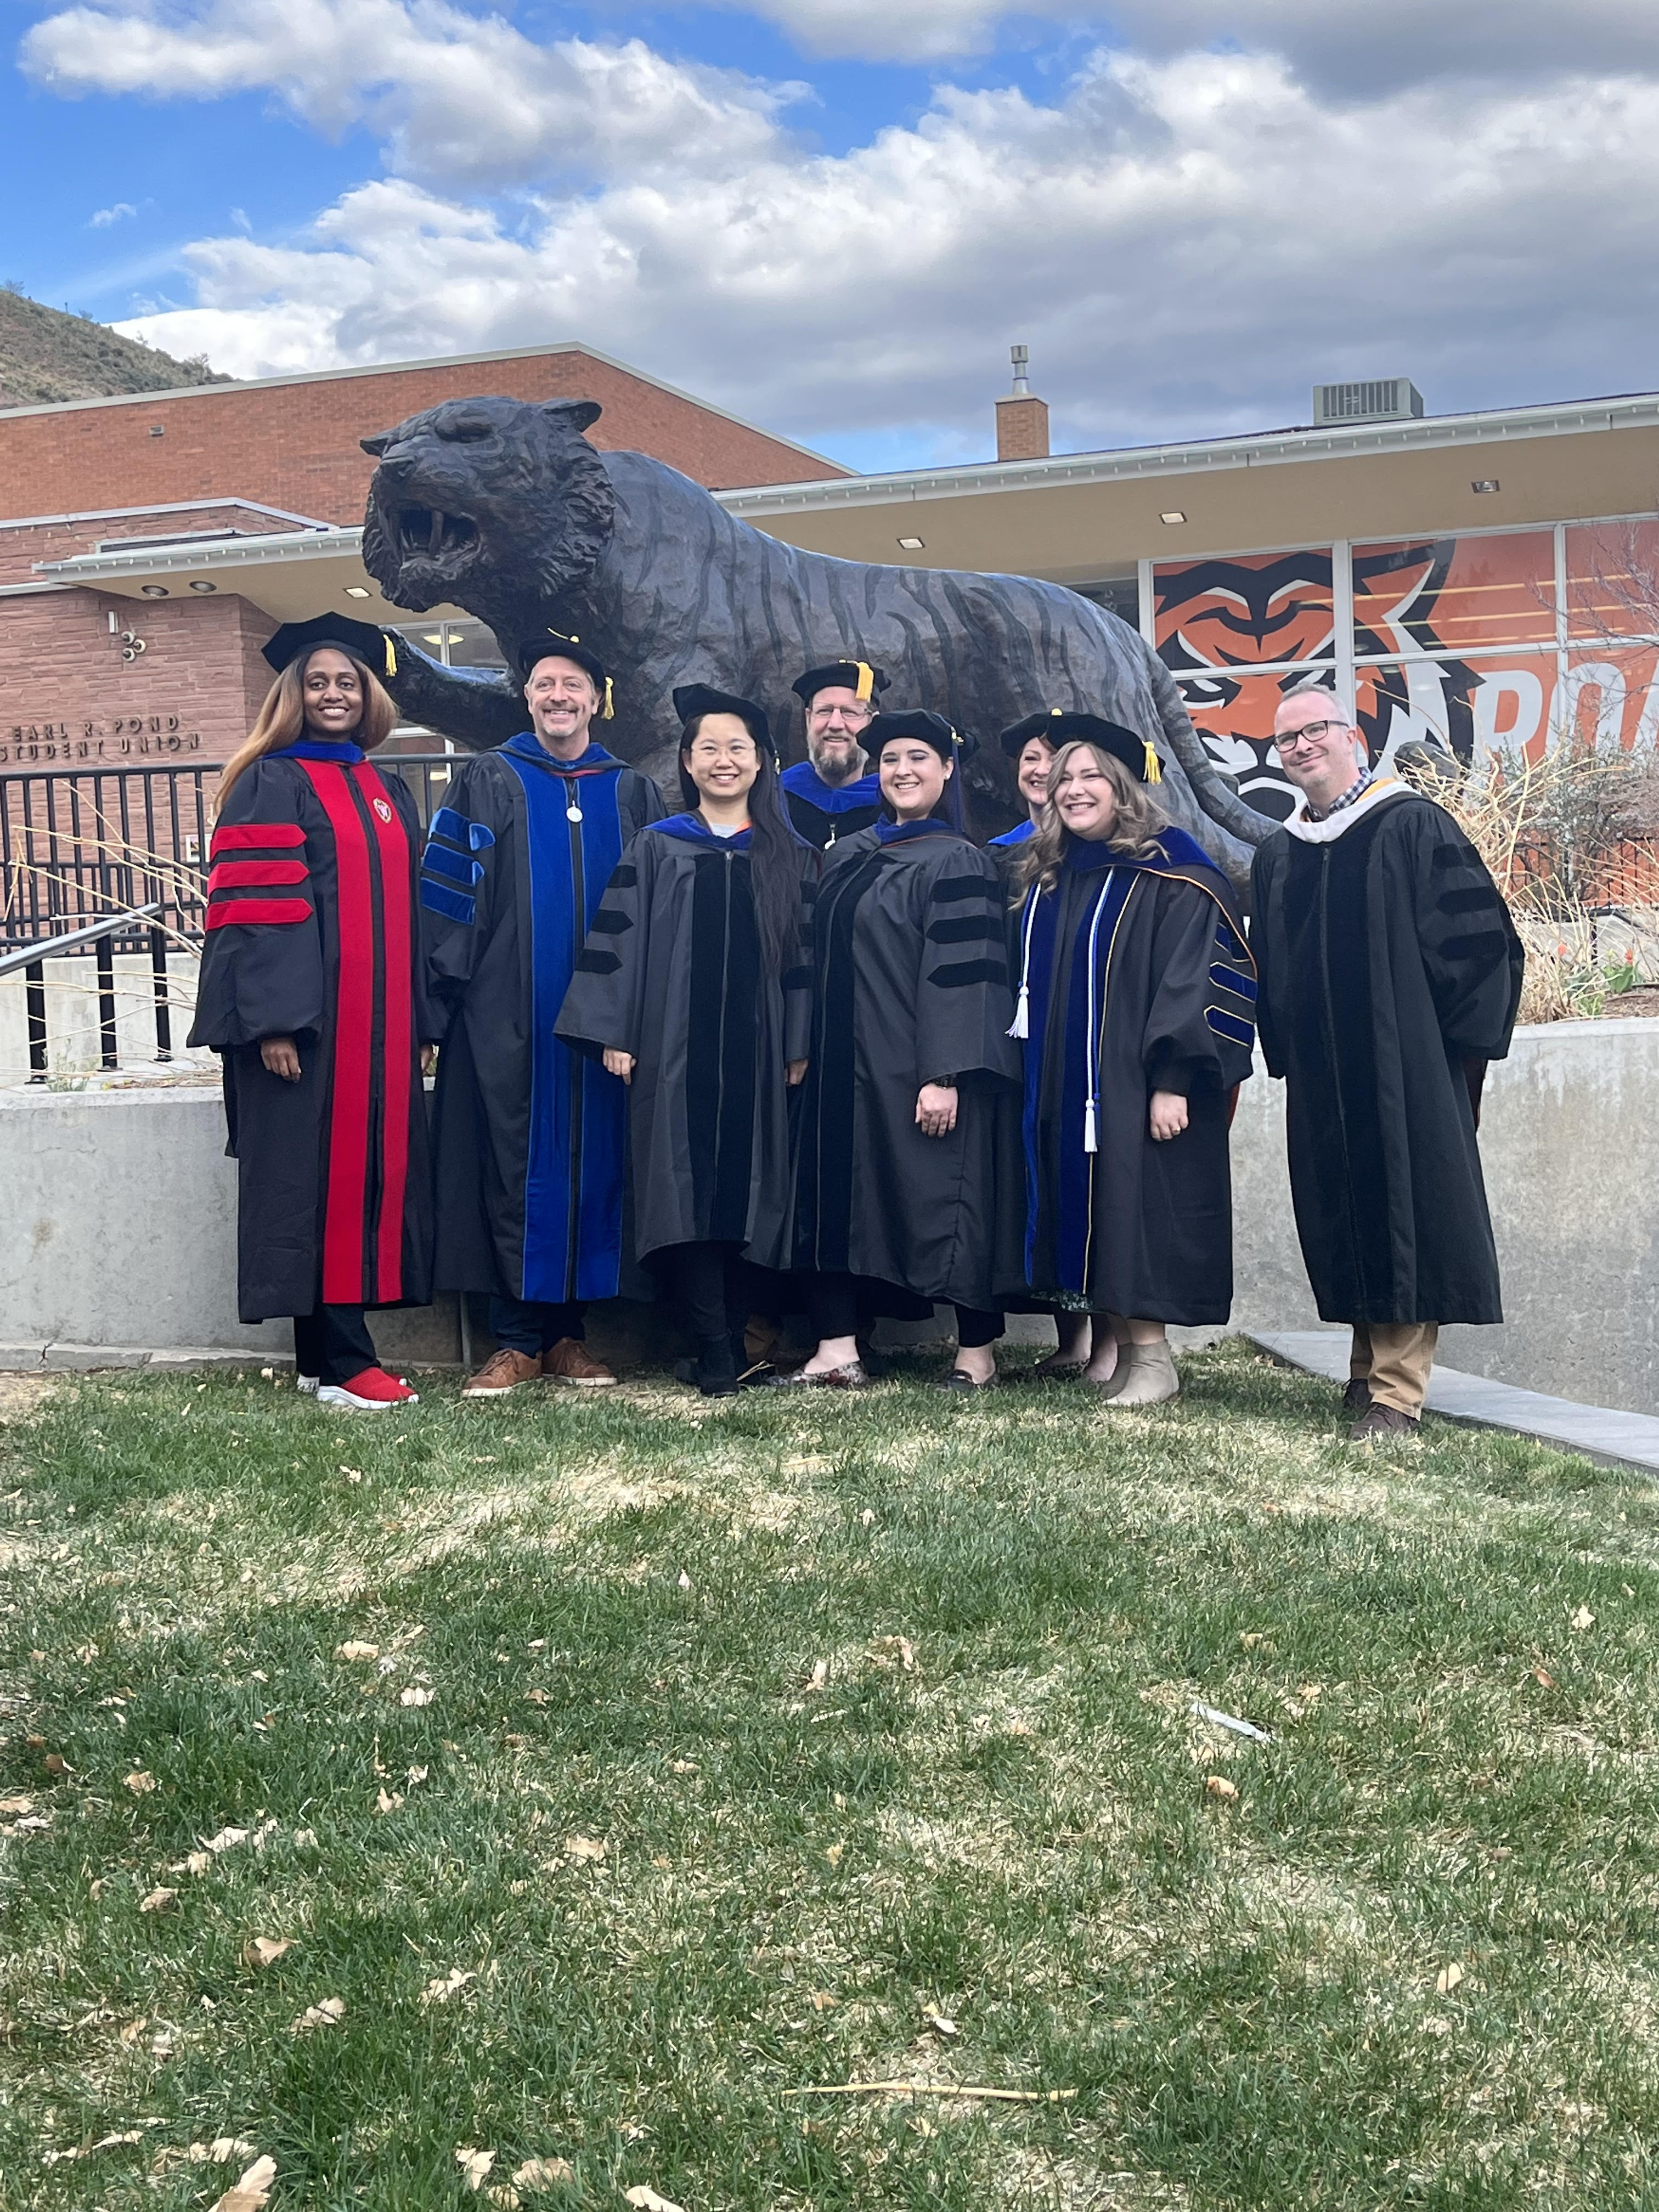 A group of doctoral graduates wearing graduation regalia